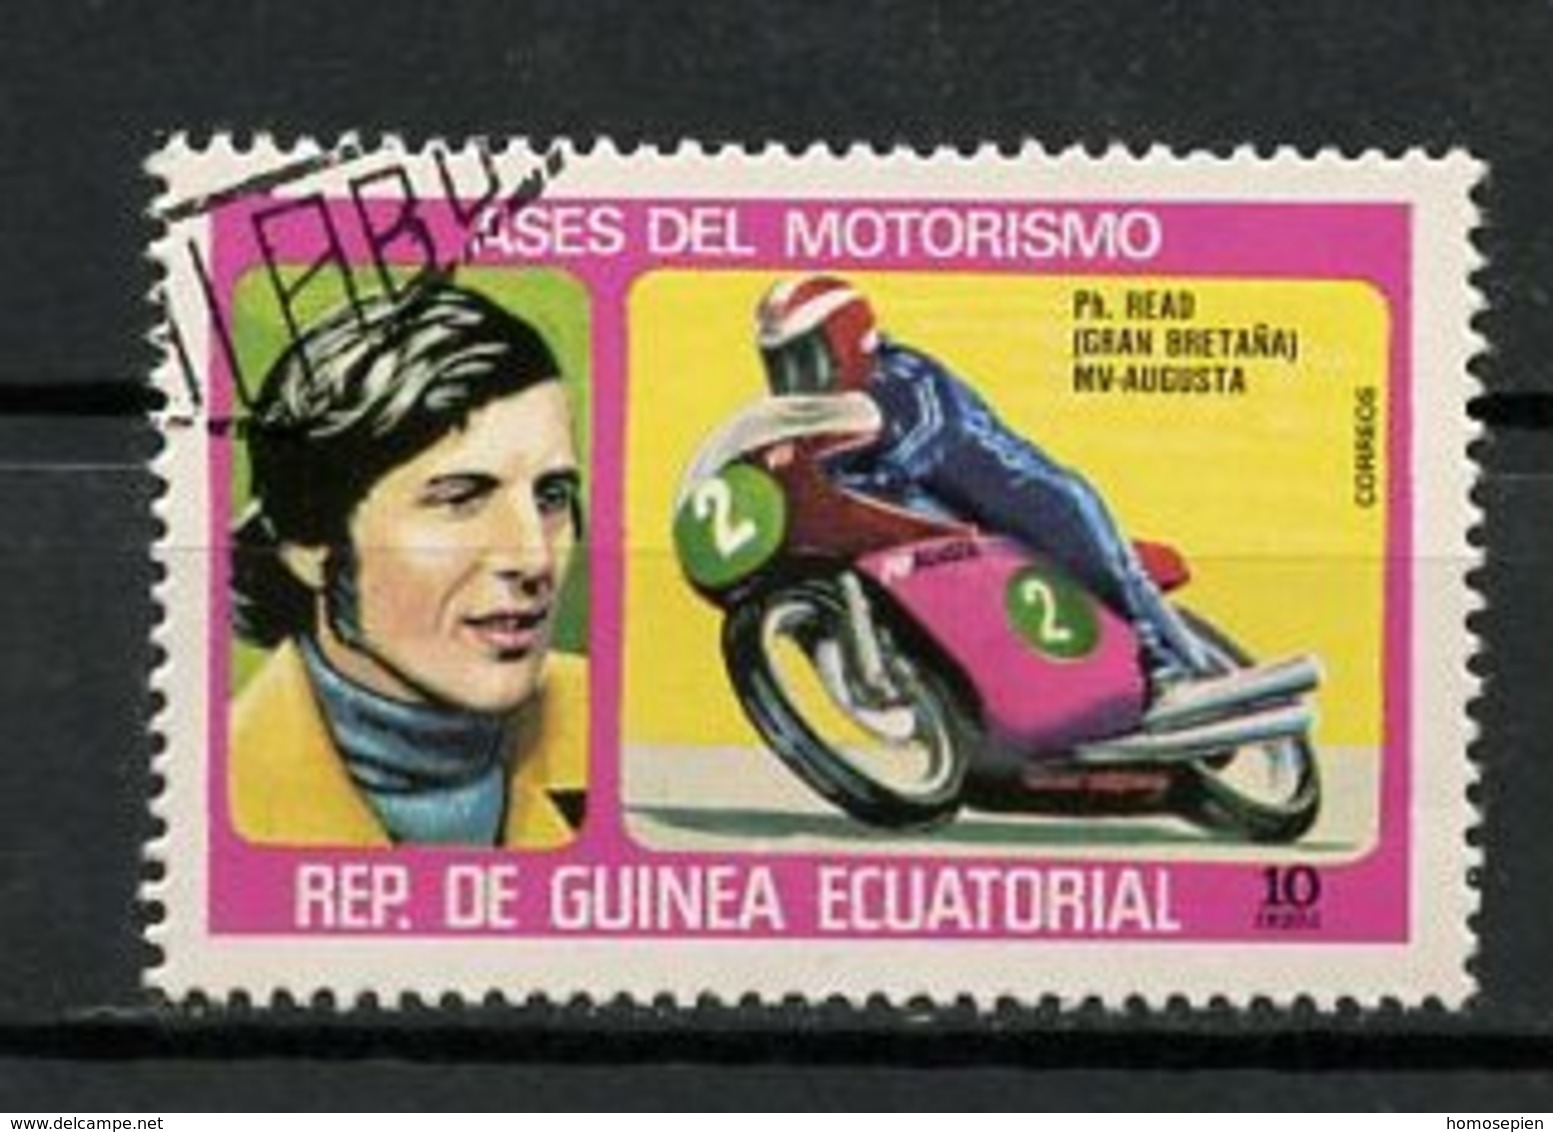 Guinée équatoriale - Guinea 1976 Y&T N°88-10e - Michel N°900 (o) - 10e Moto P Read MV Augusta - Equatorial Guinea